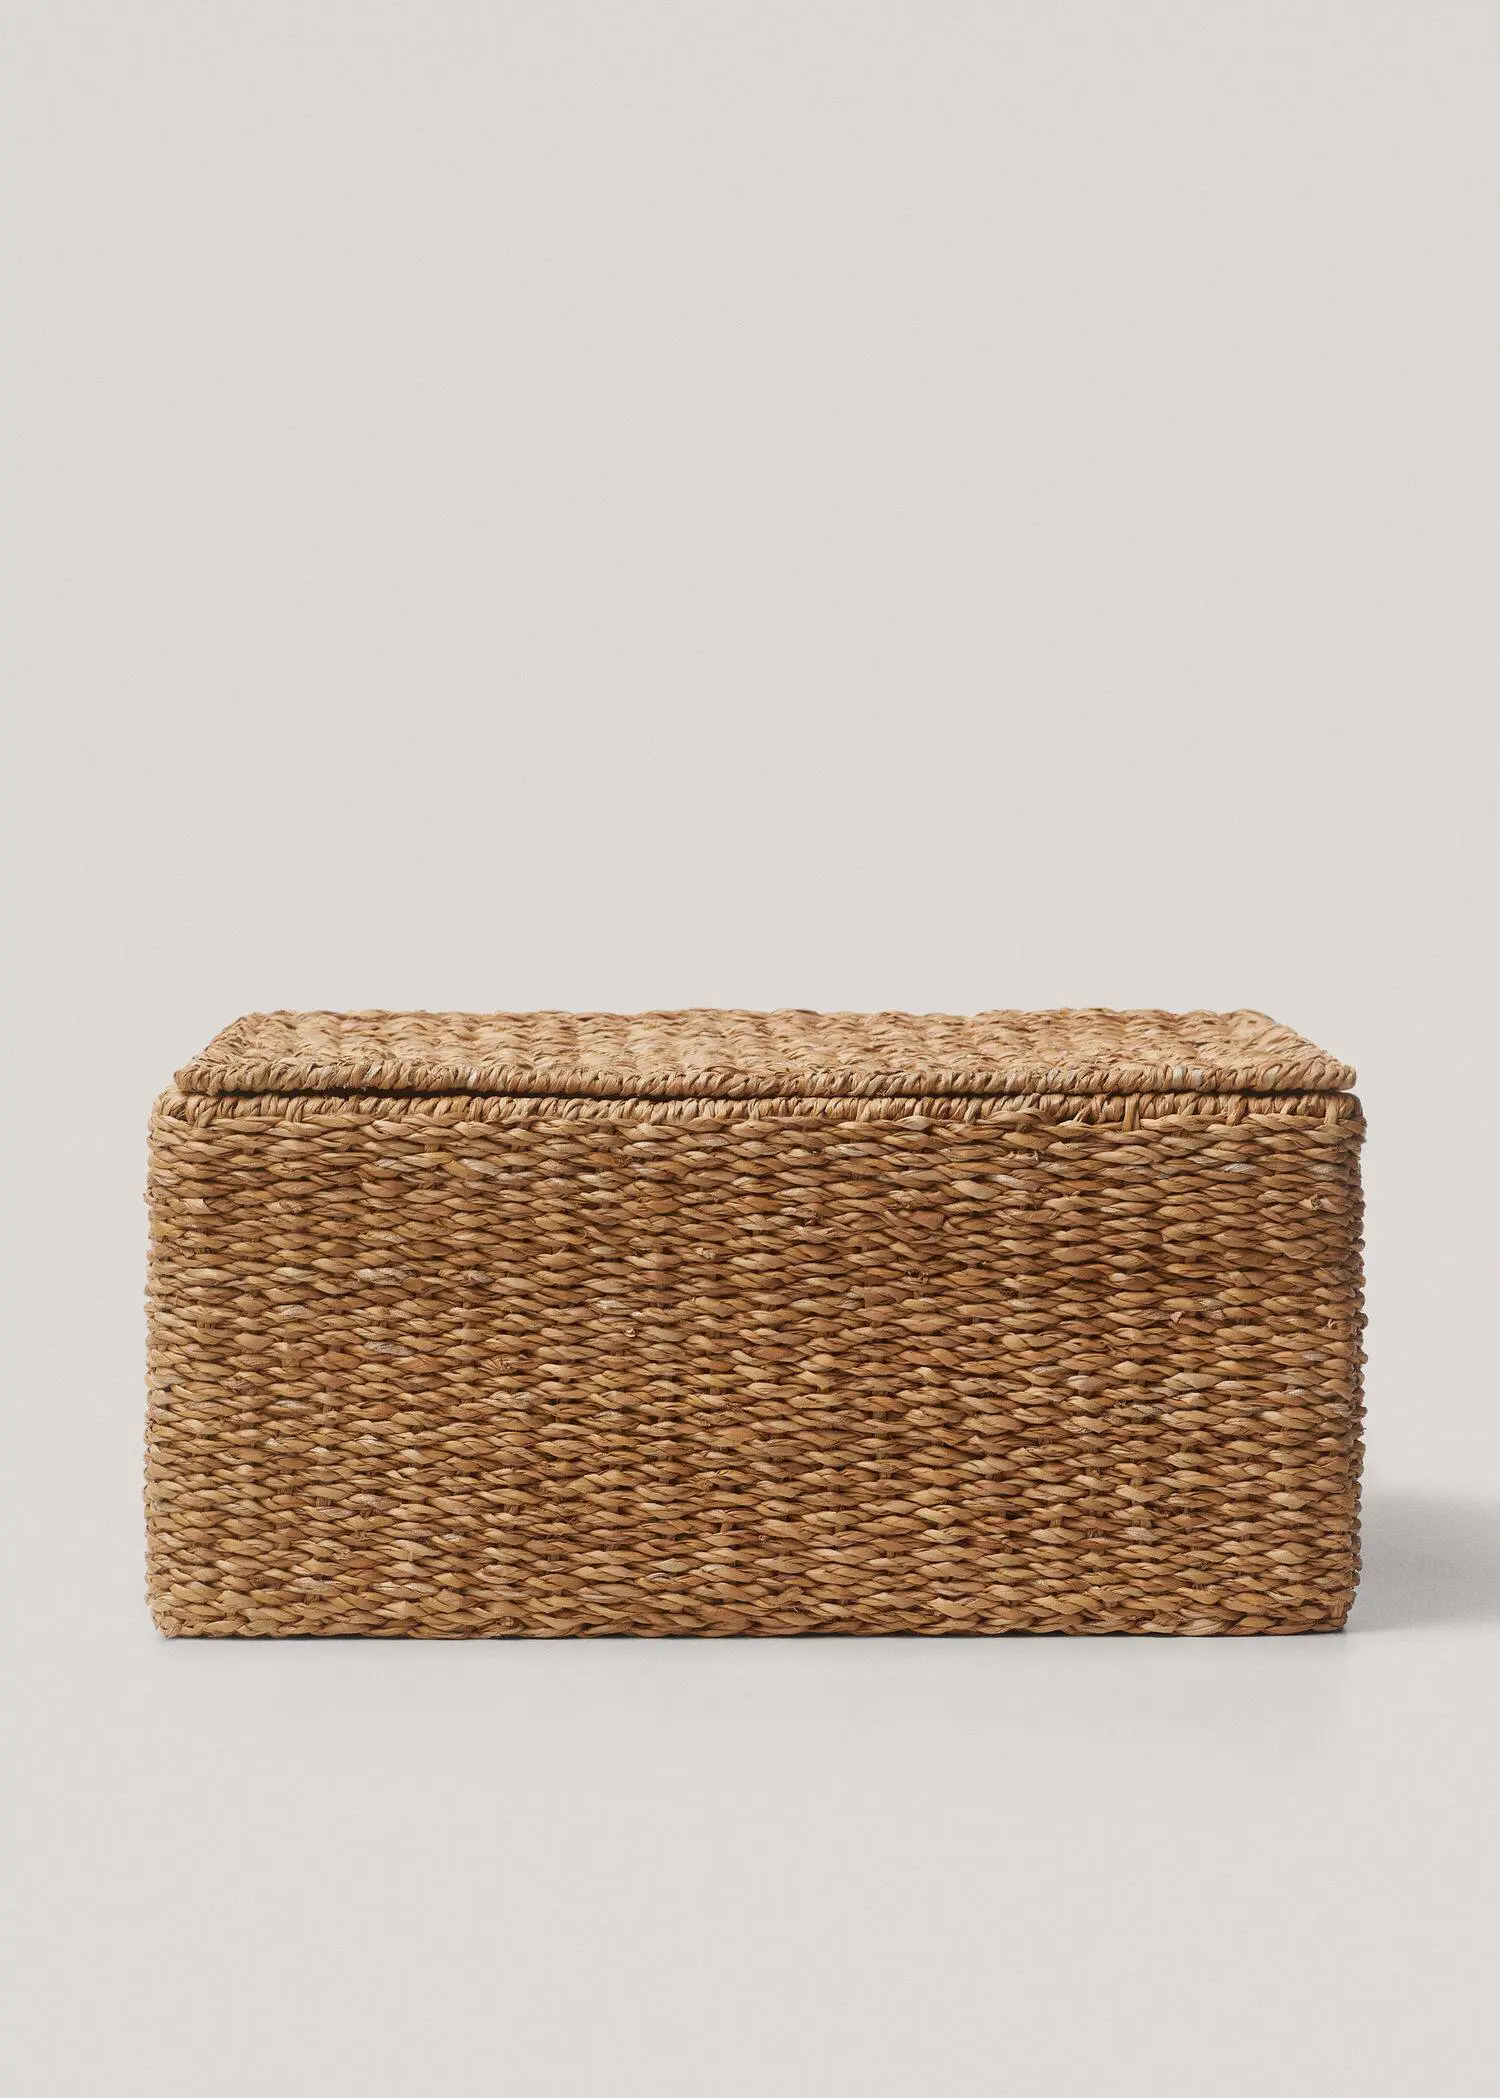 Mango Braided basket with handles 45x35cm. 1